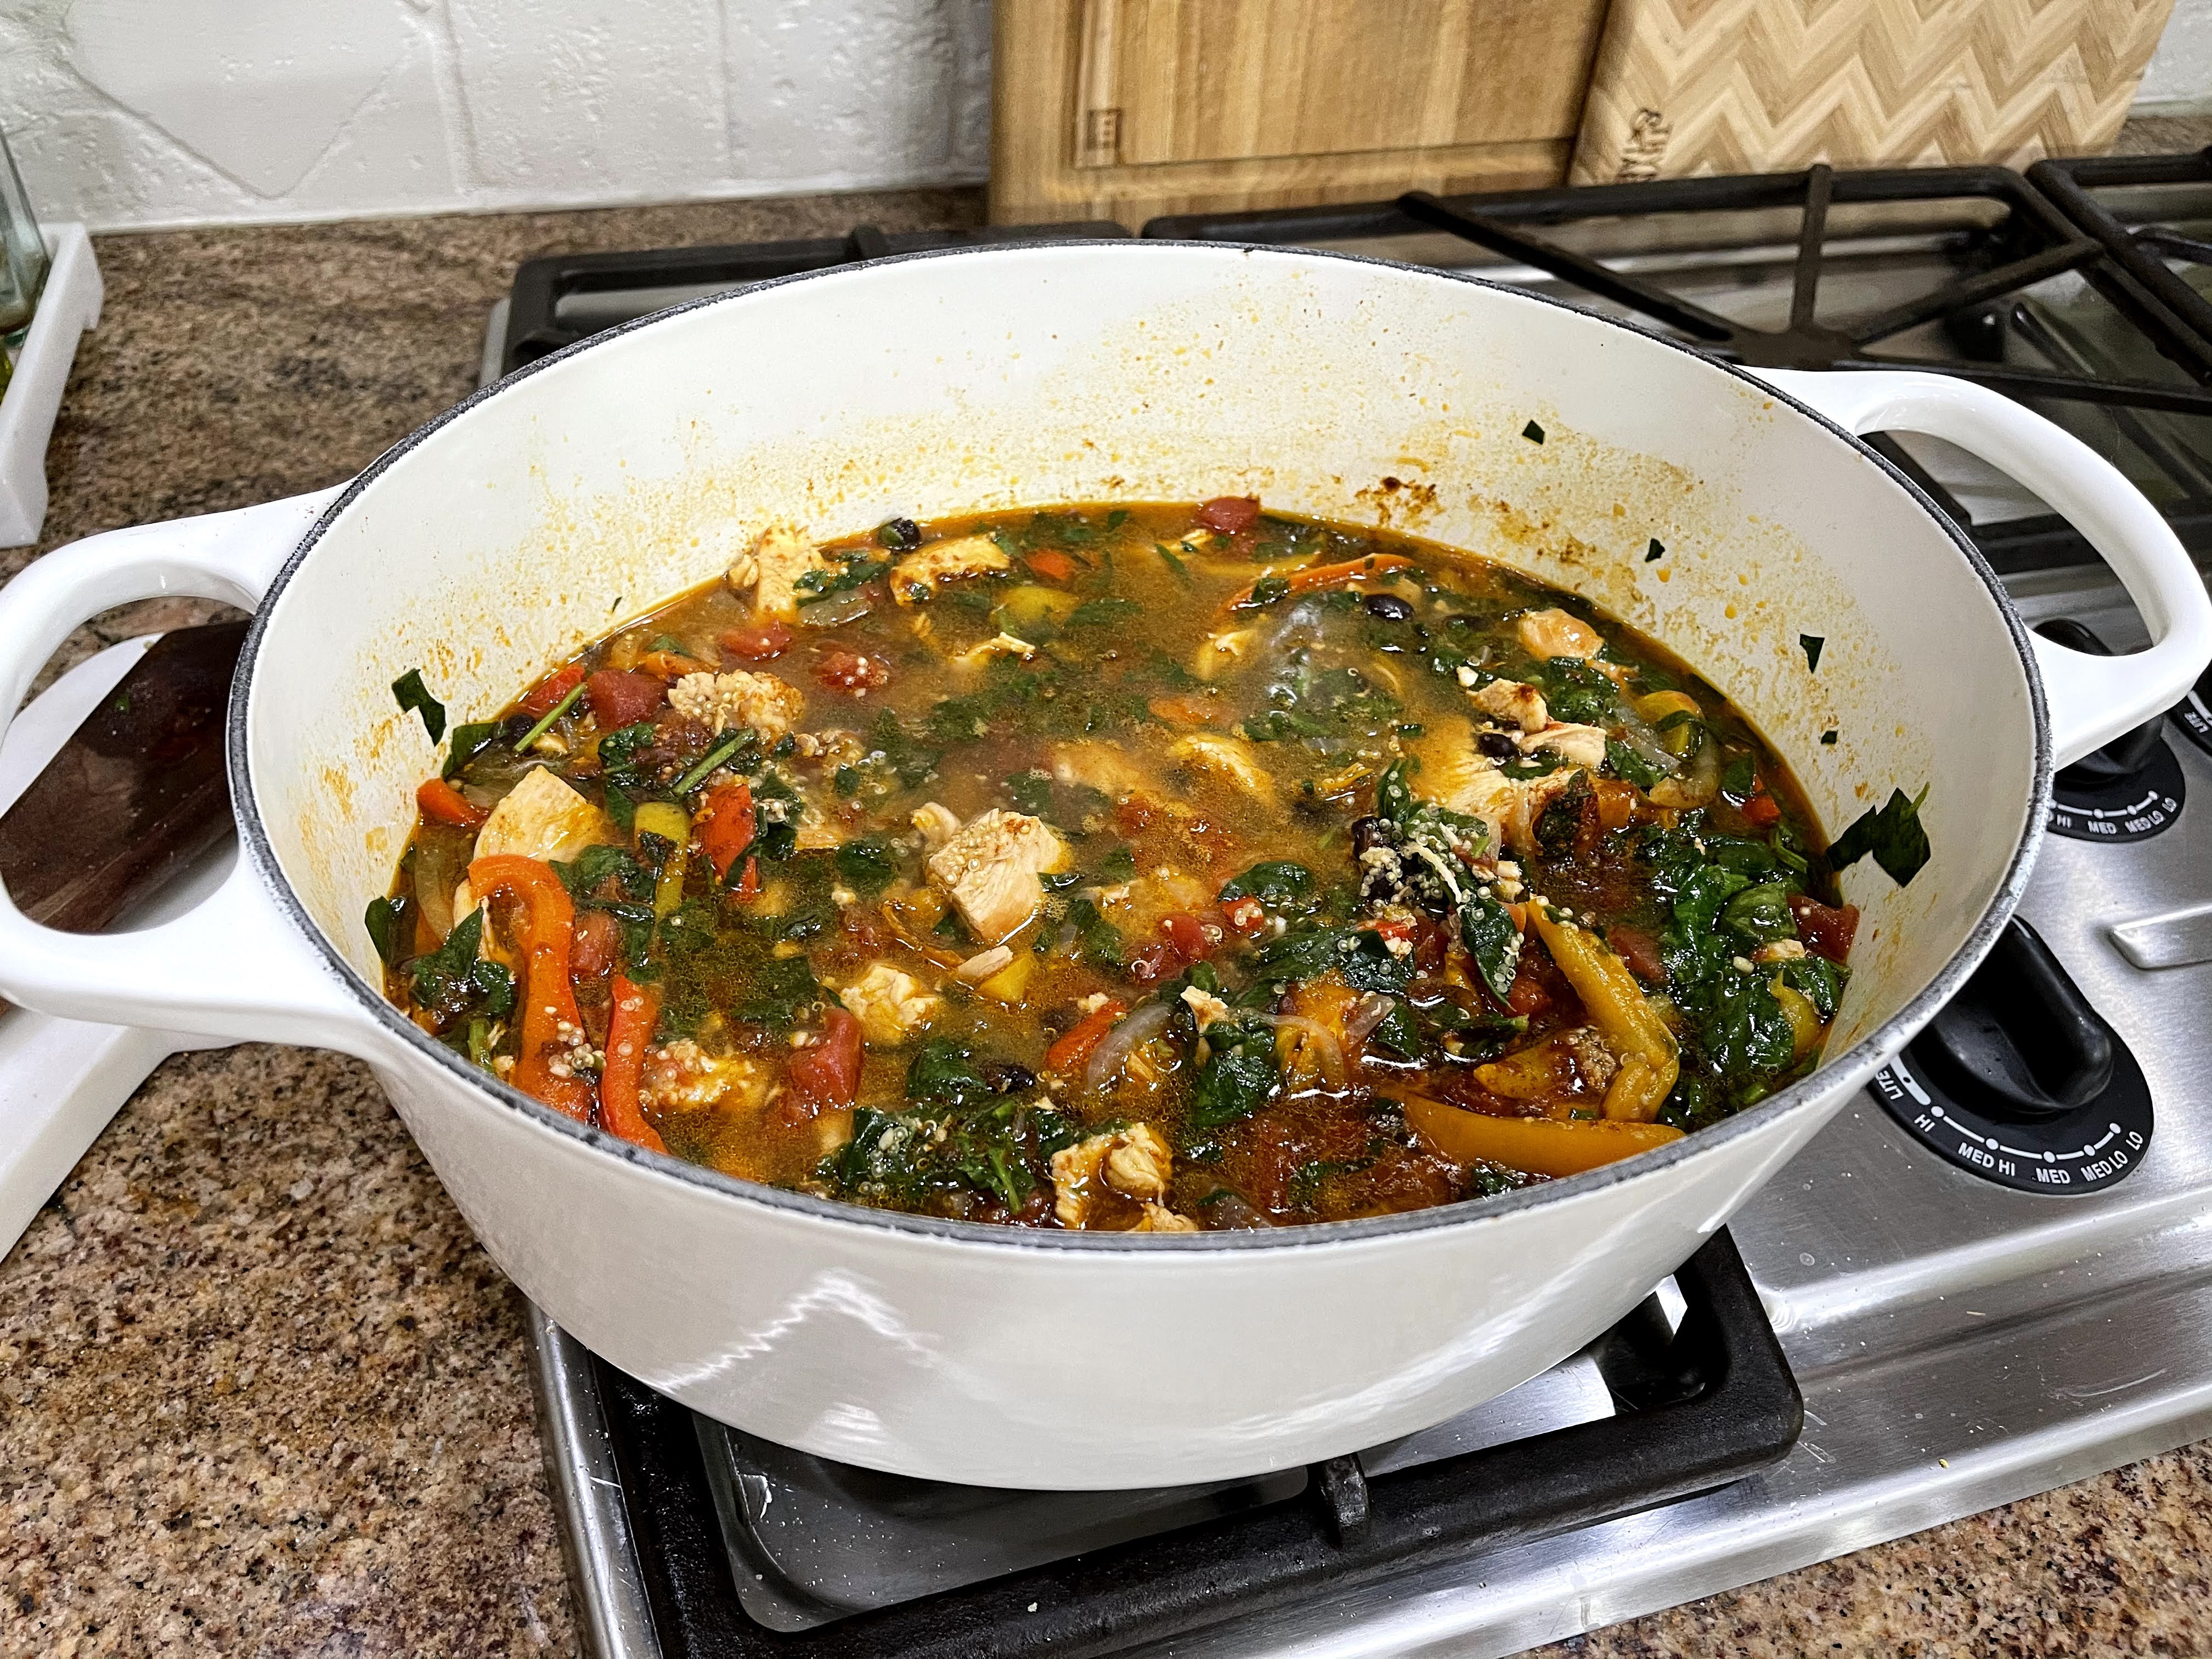 Chicken Fajita Soup with Quinoa – An Easy Gluten-Free, Low-Carb Dinner Recipe